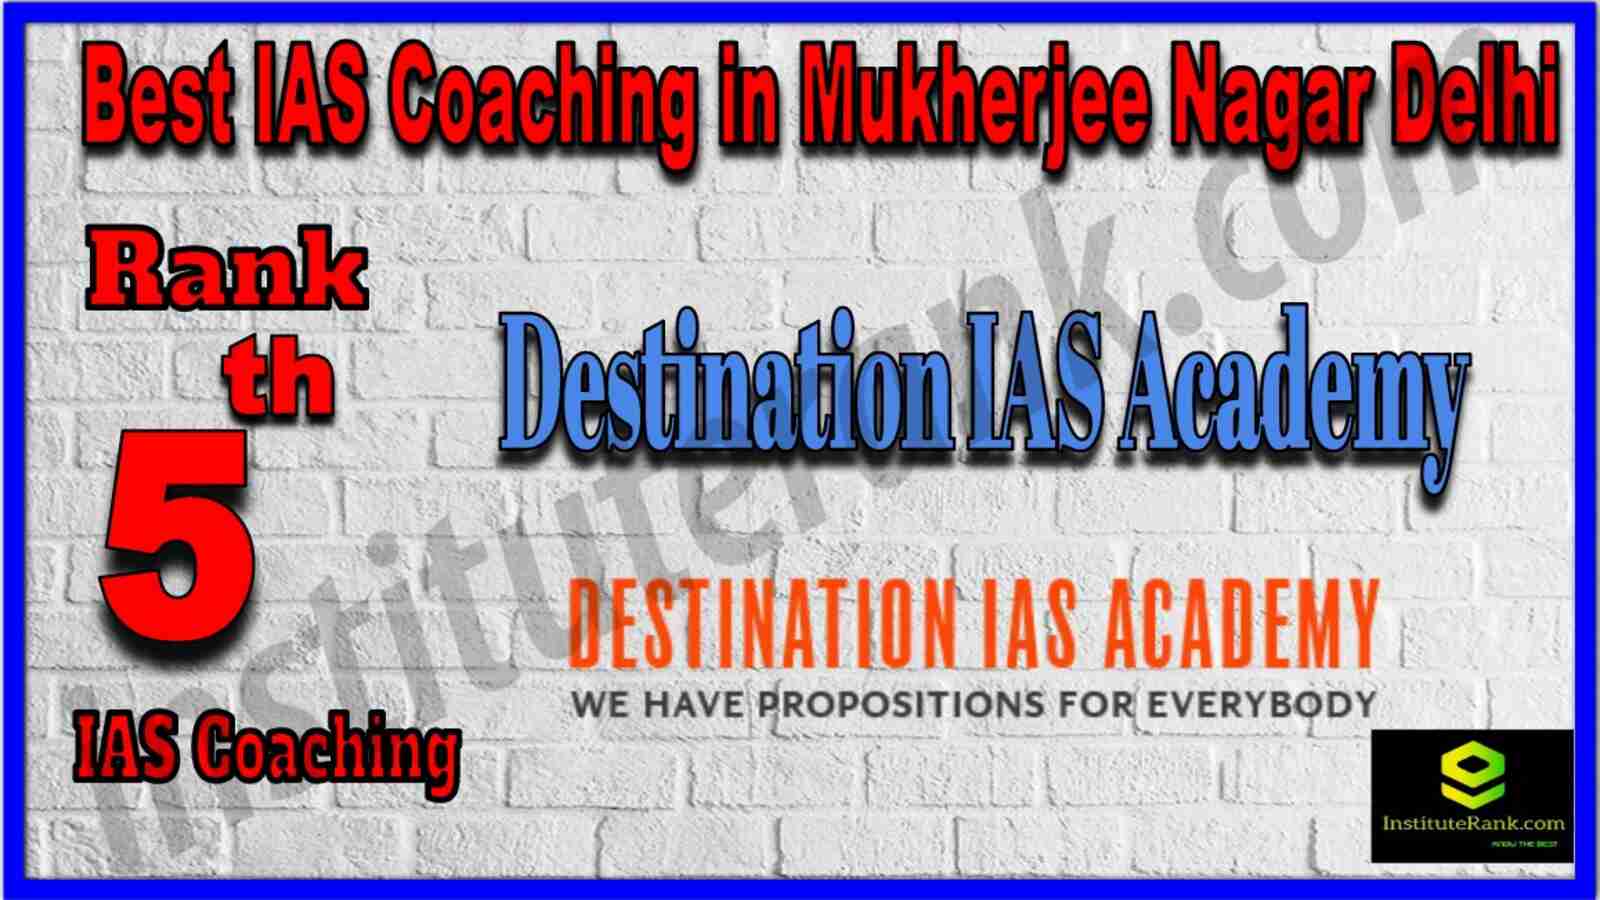 5th Best IAS Coaching Mukherjee Nagar Delhi